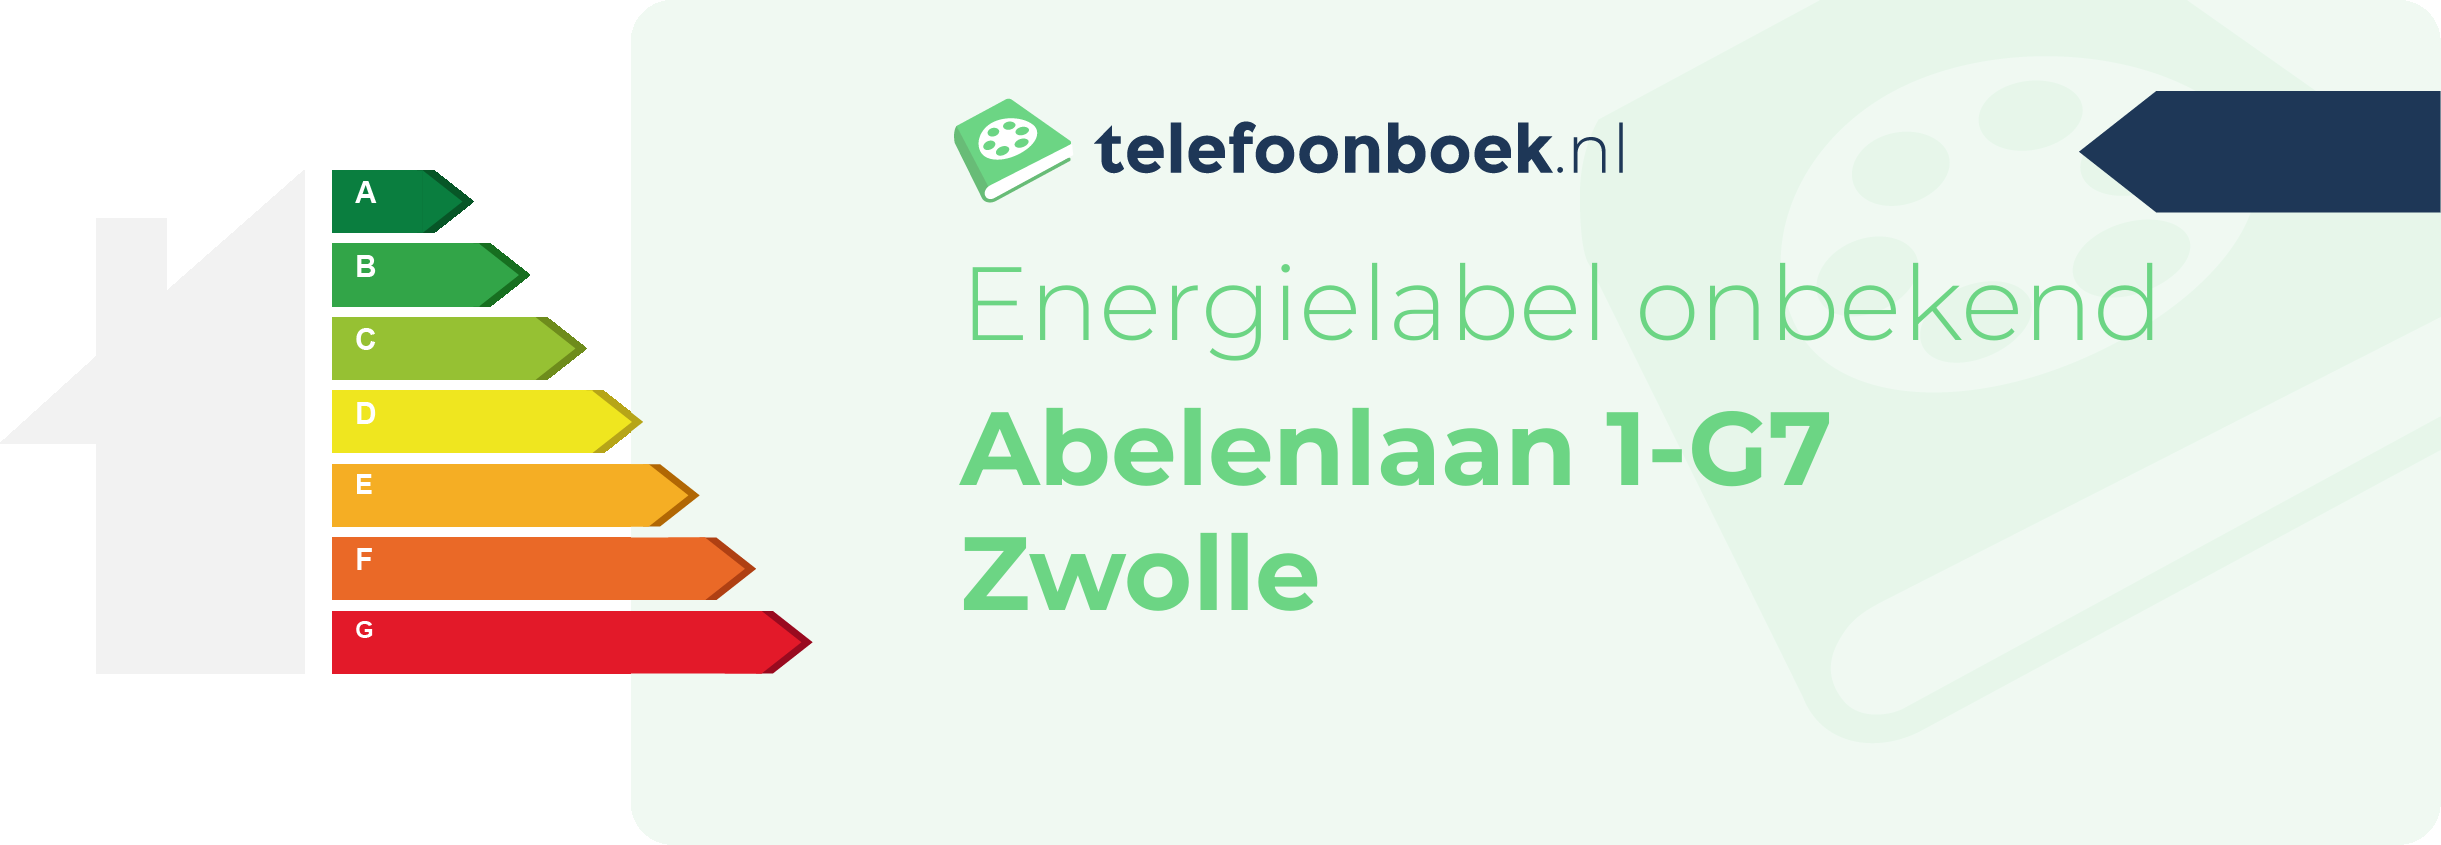 Energielabel Abelenlaan 1-G7 Zwolle